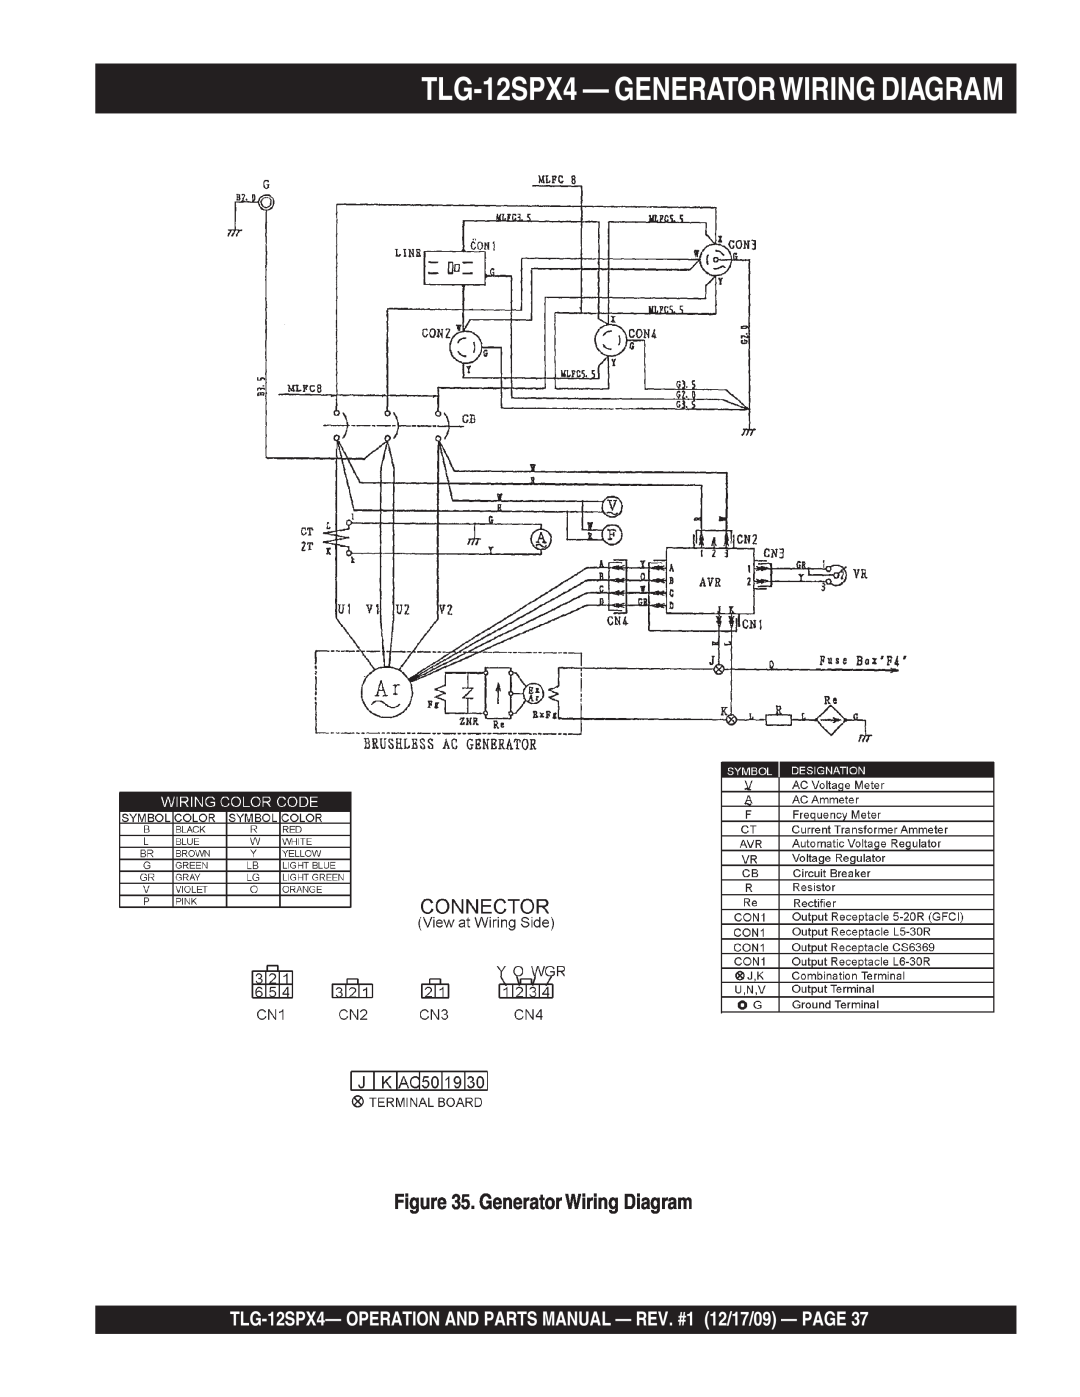 Multiquip operation manual TLG-12SPX4- GENERATORWIRING DIAGRAM, Generator Wiring Diagram 